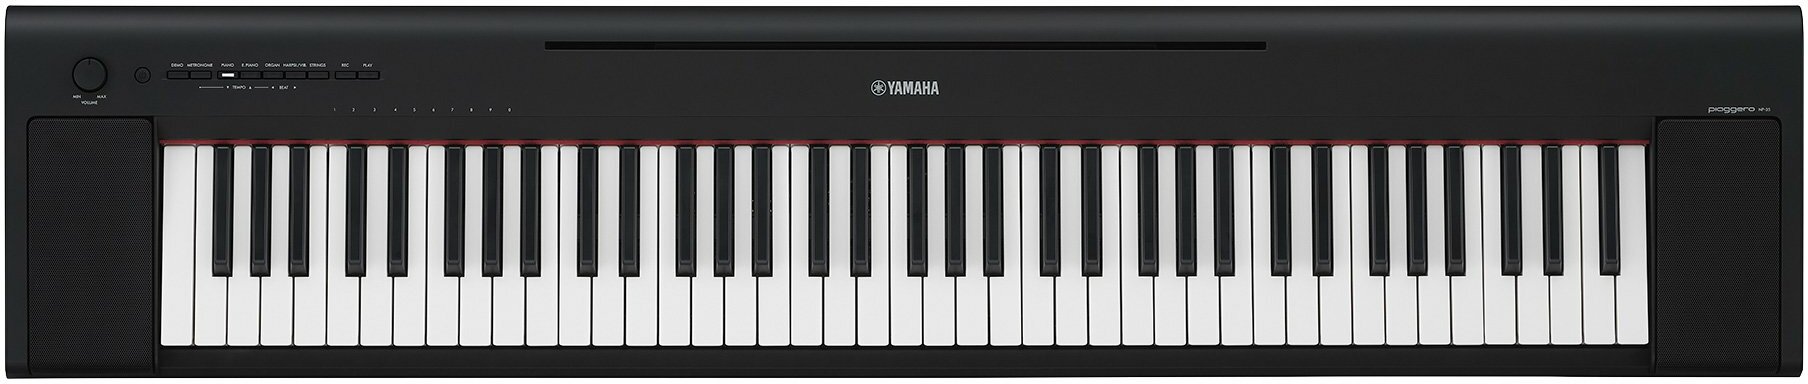 Yamaha Np-35 B - Portable digital piano - Main picture